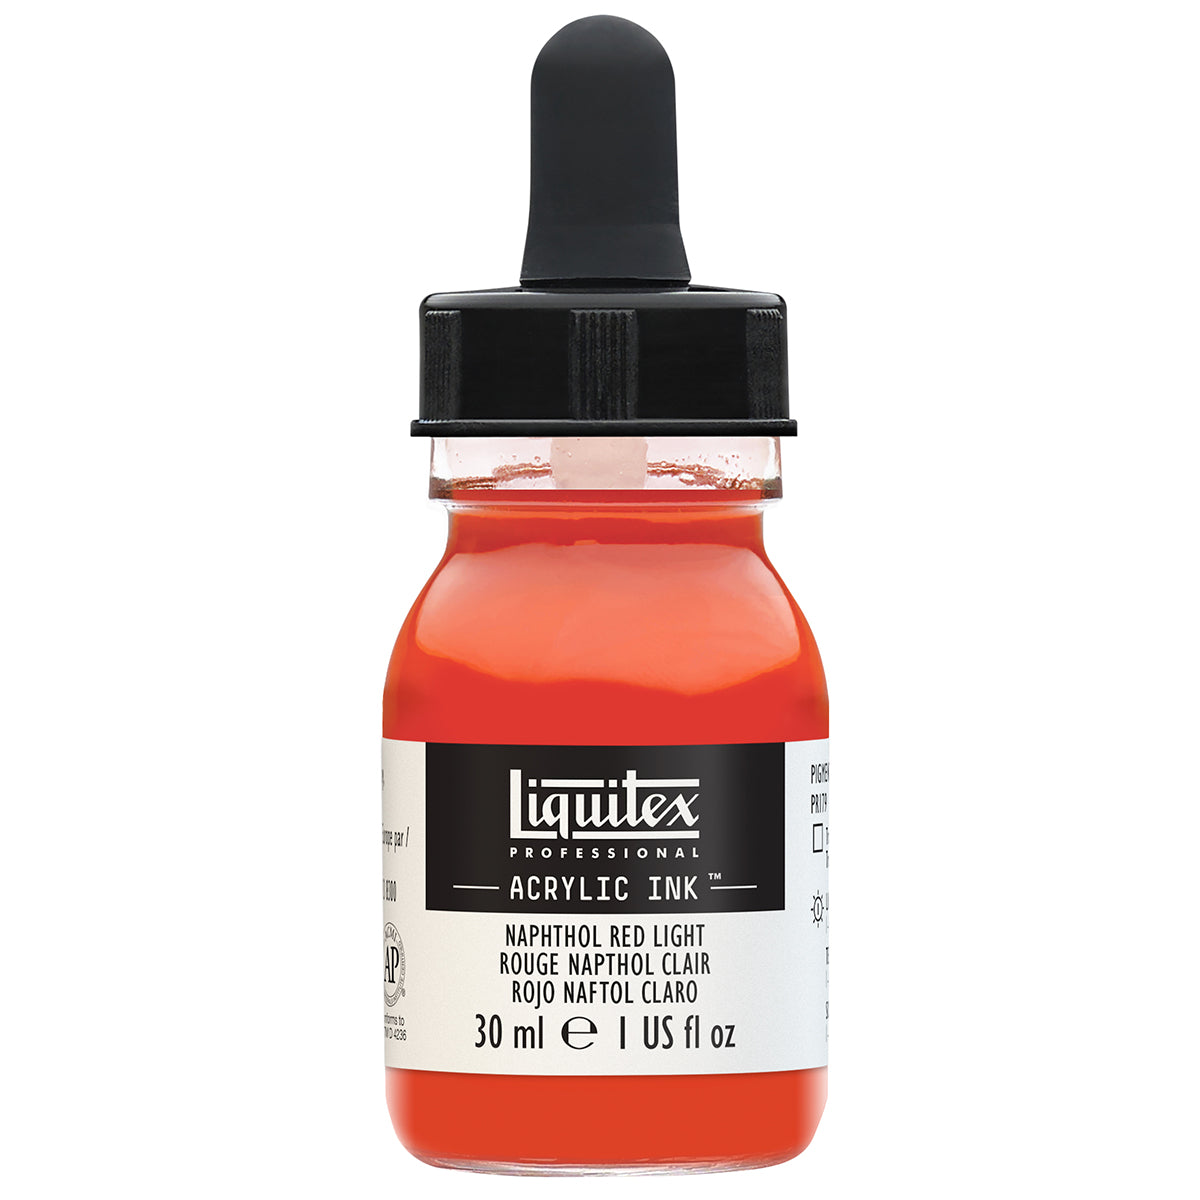 Liquitex - Acrylic Ink - 30ml Naphthol Red Light